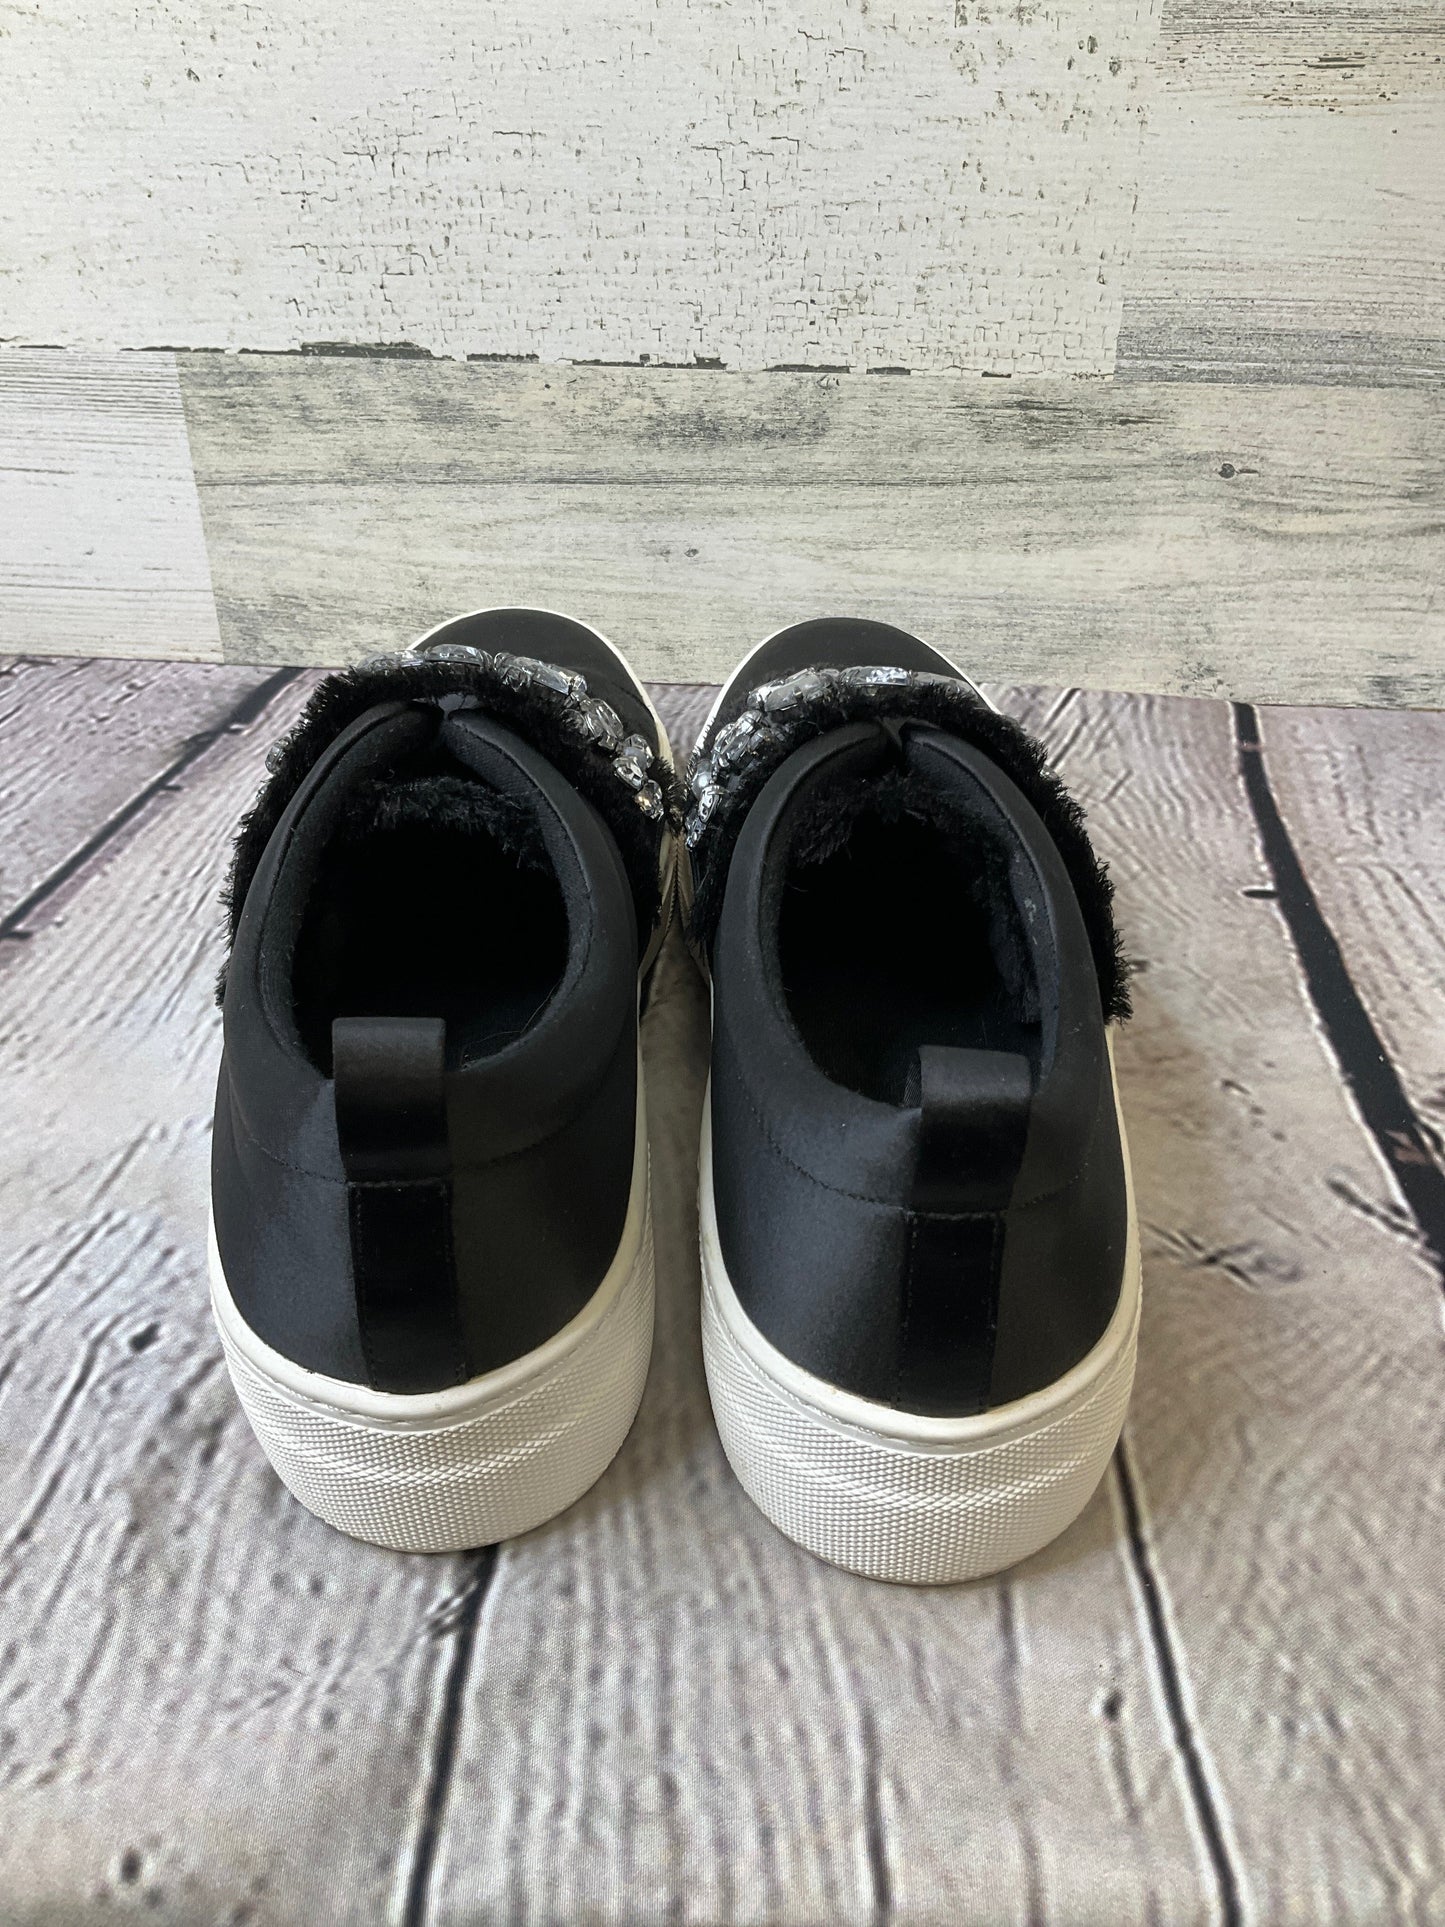 Shoes Flats By Aldo  Size: 8.5